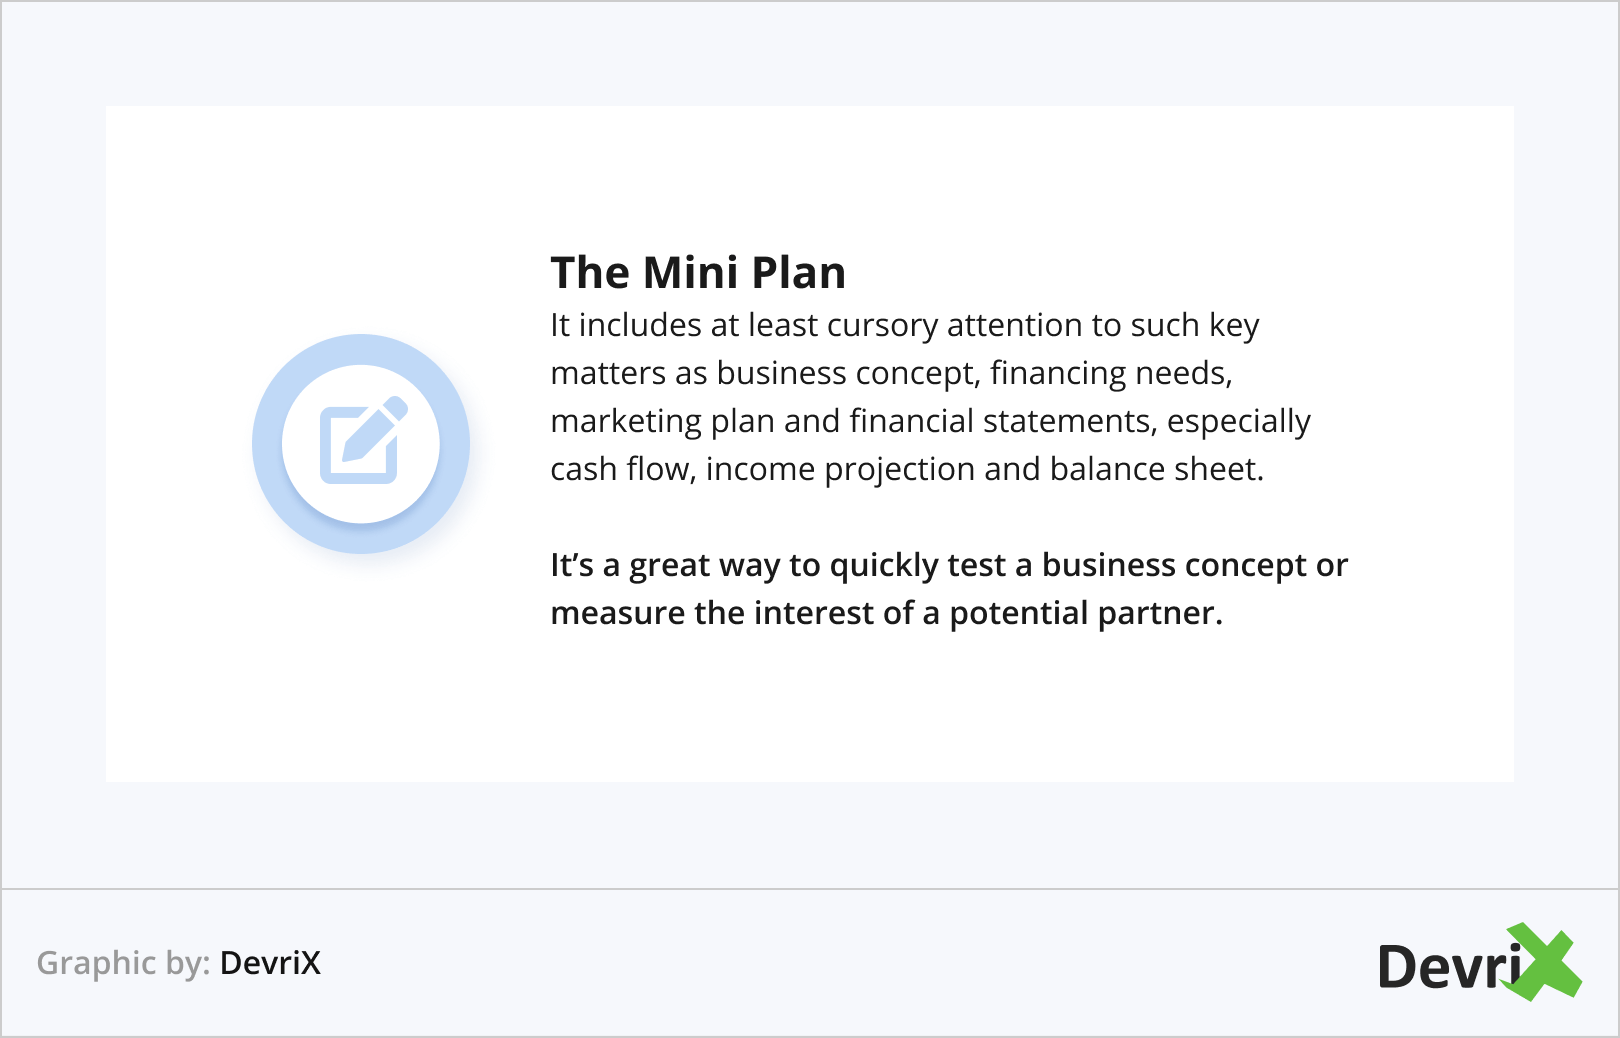 The Mini Plan